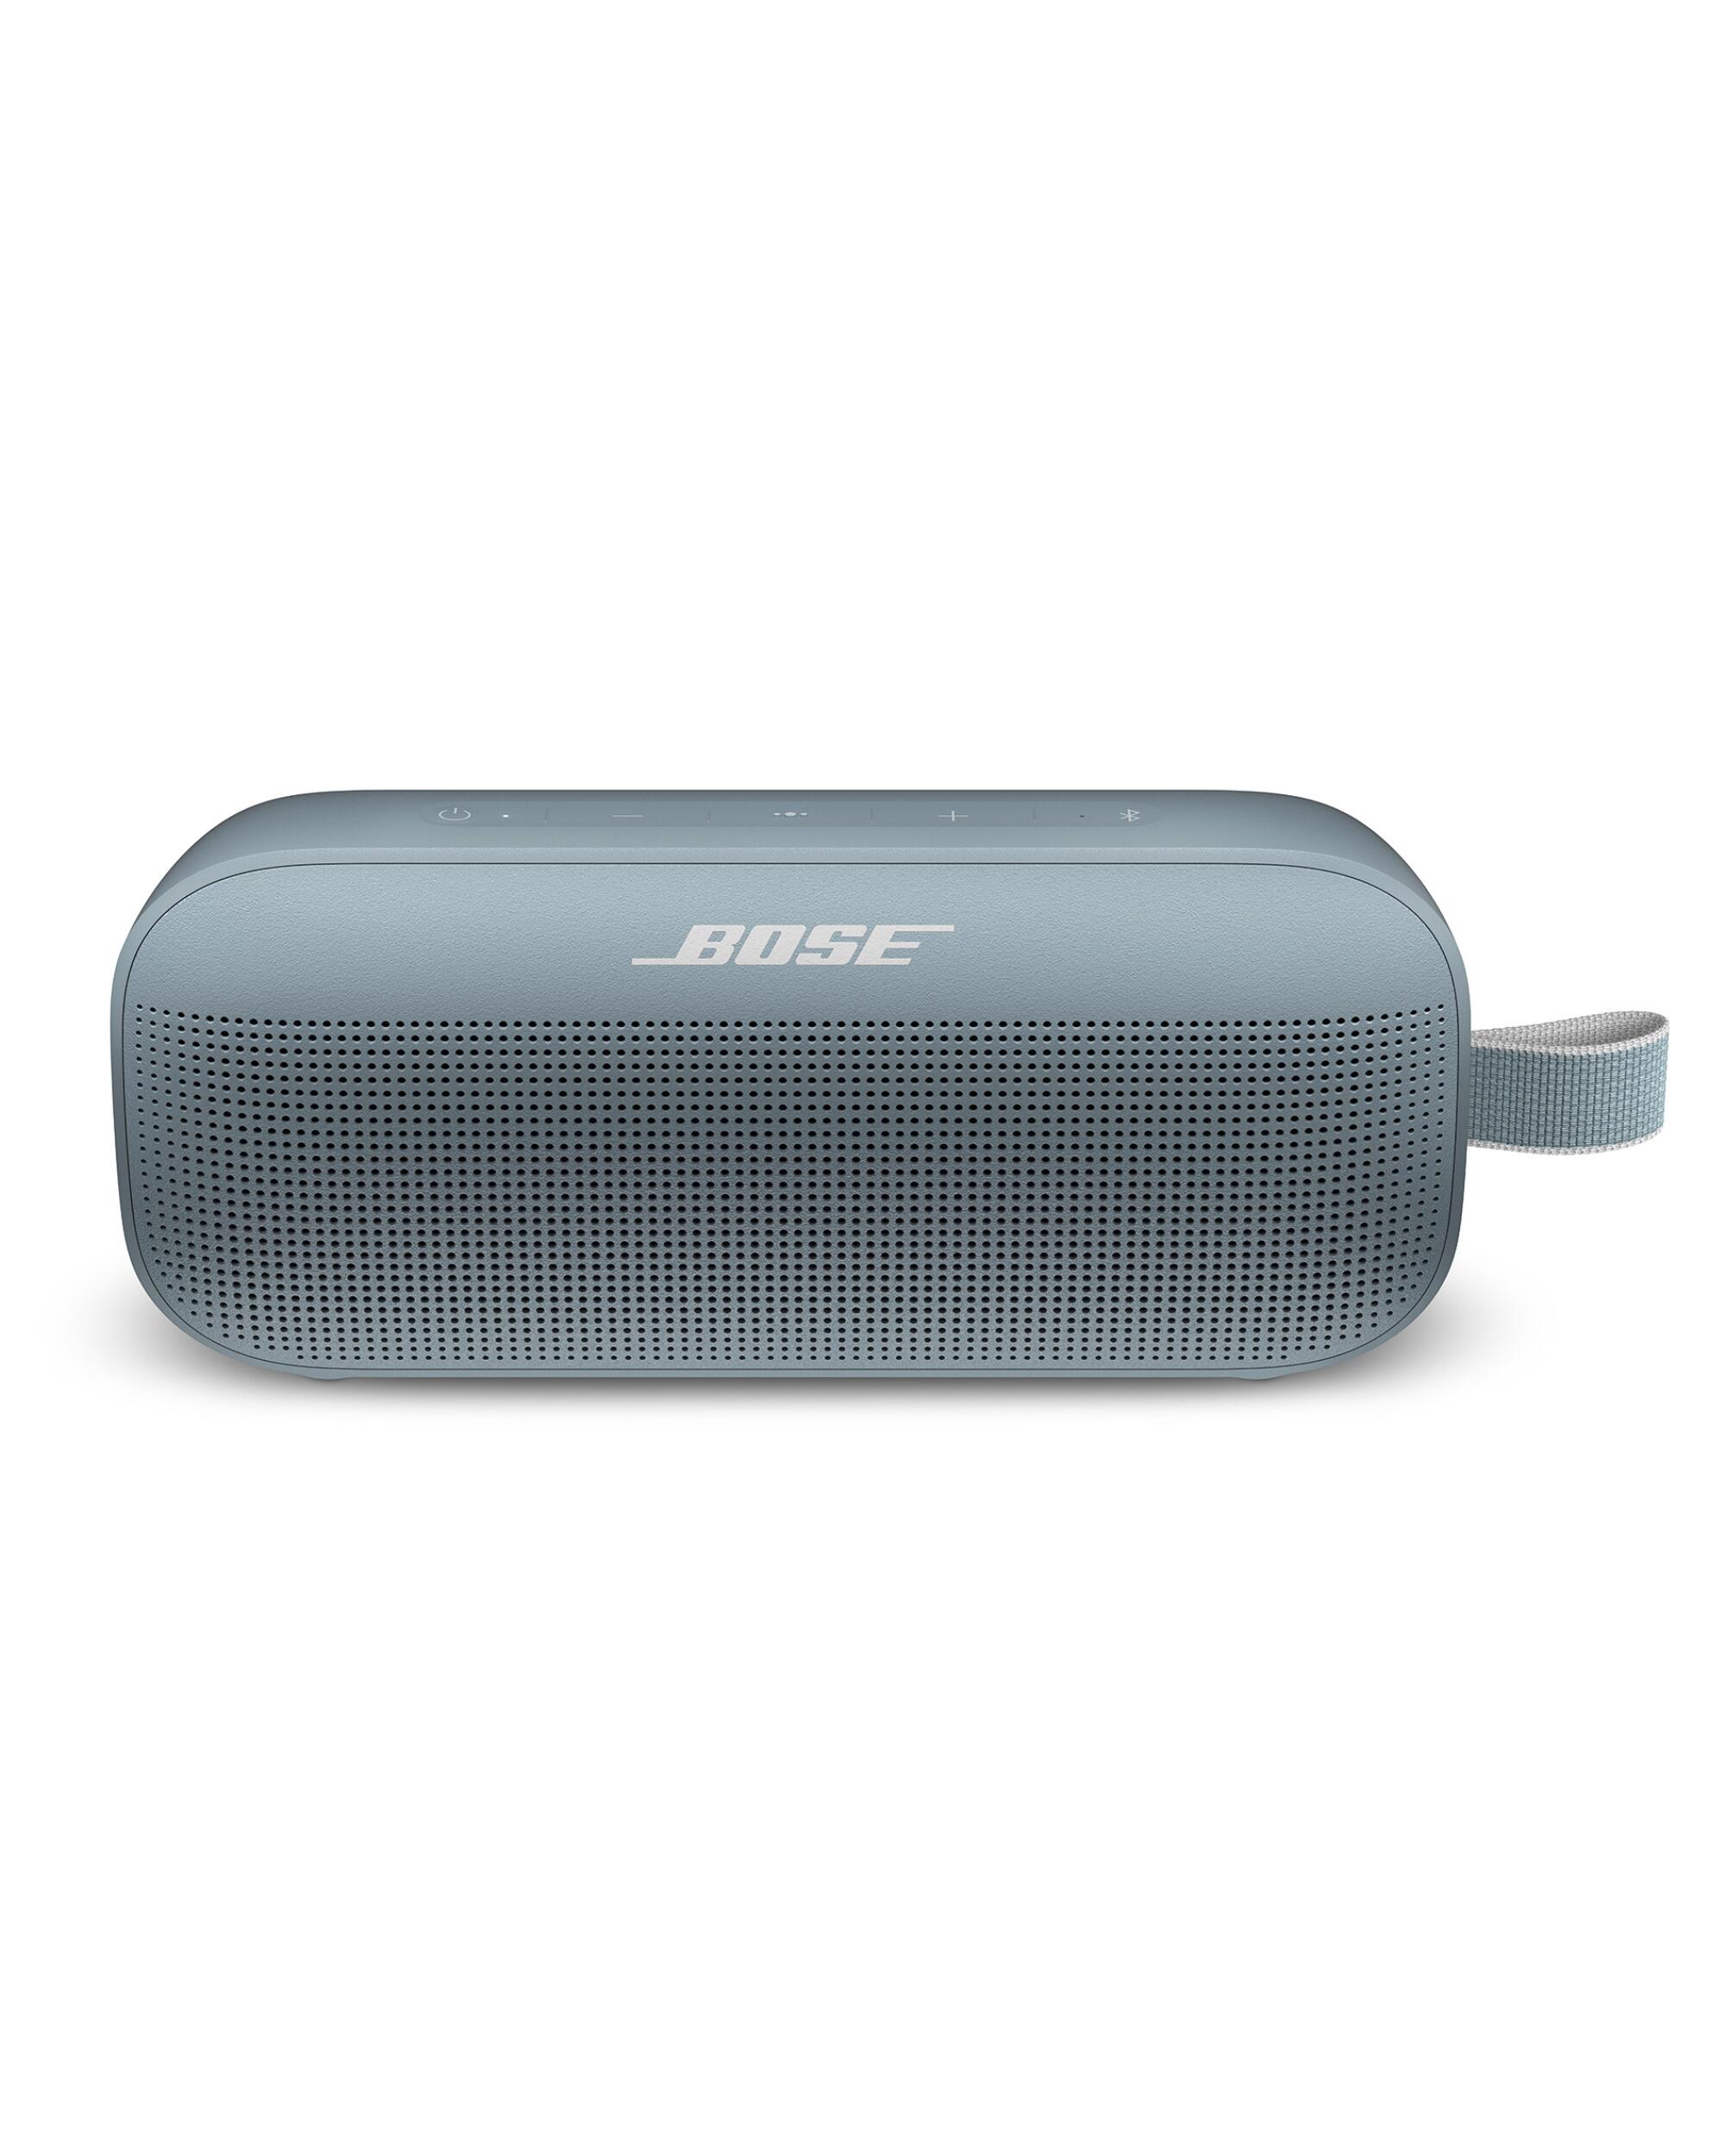 The SoundLink Flex portable speaker by Bose